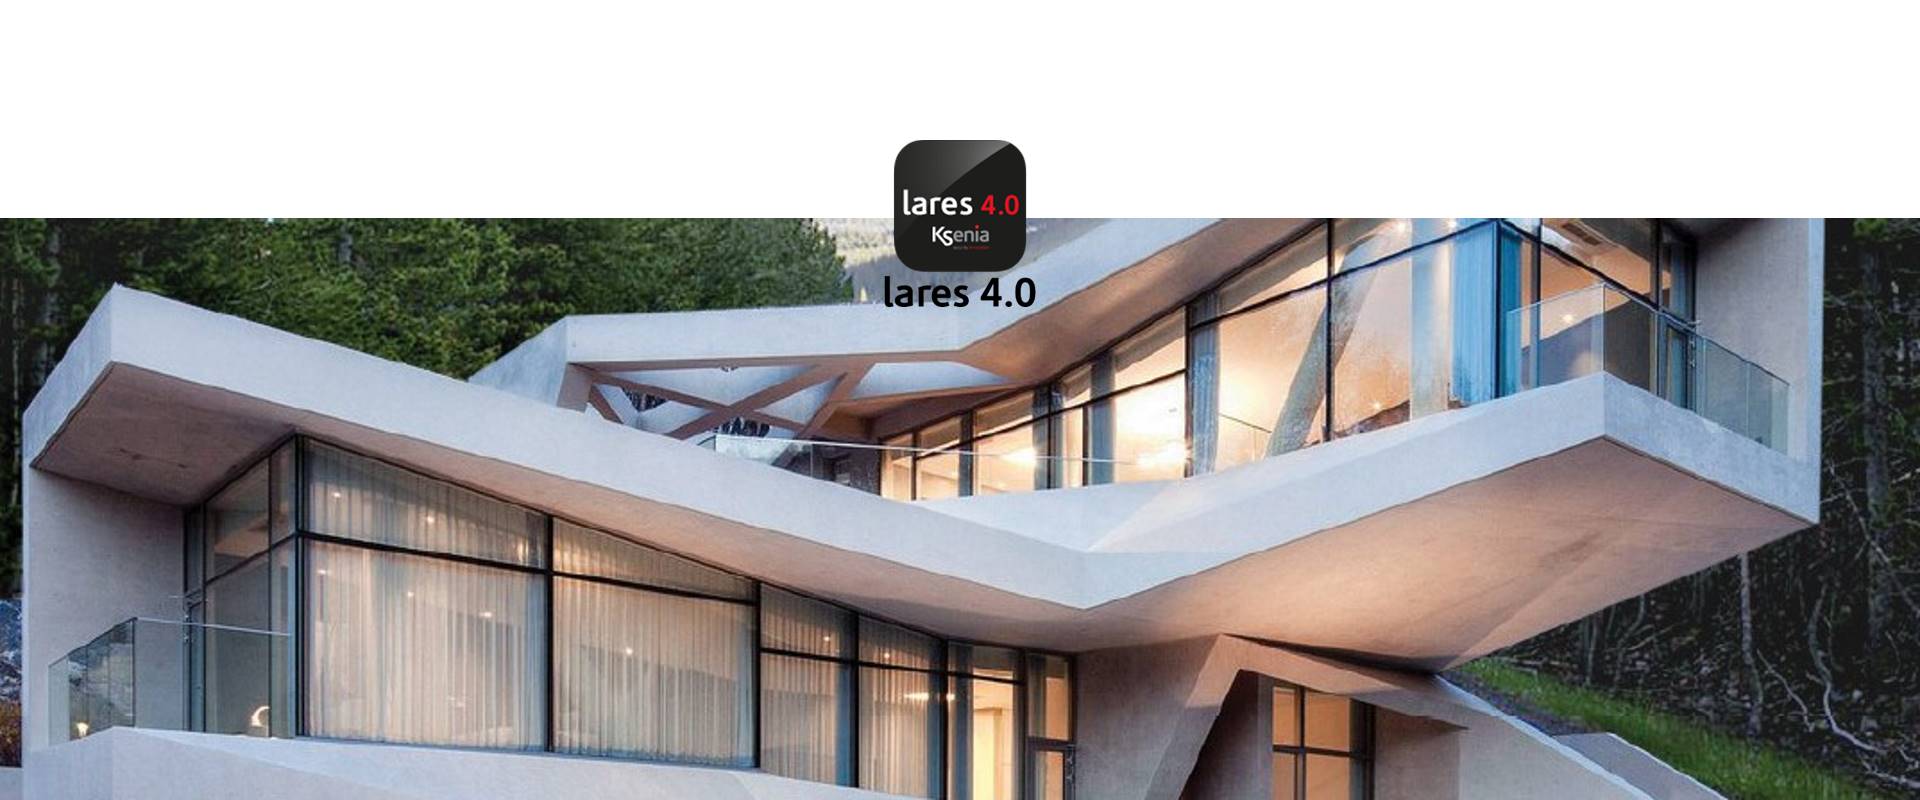 lares-4-header